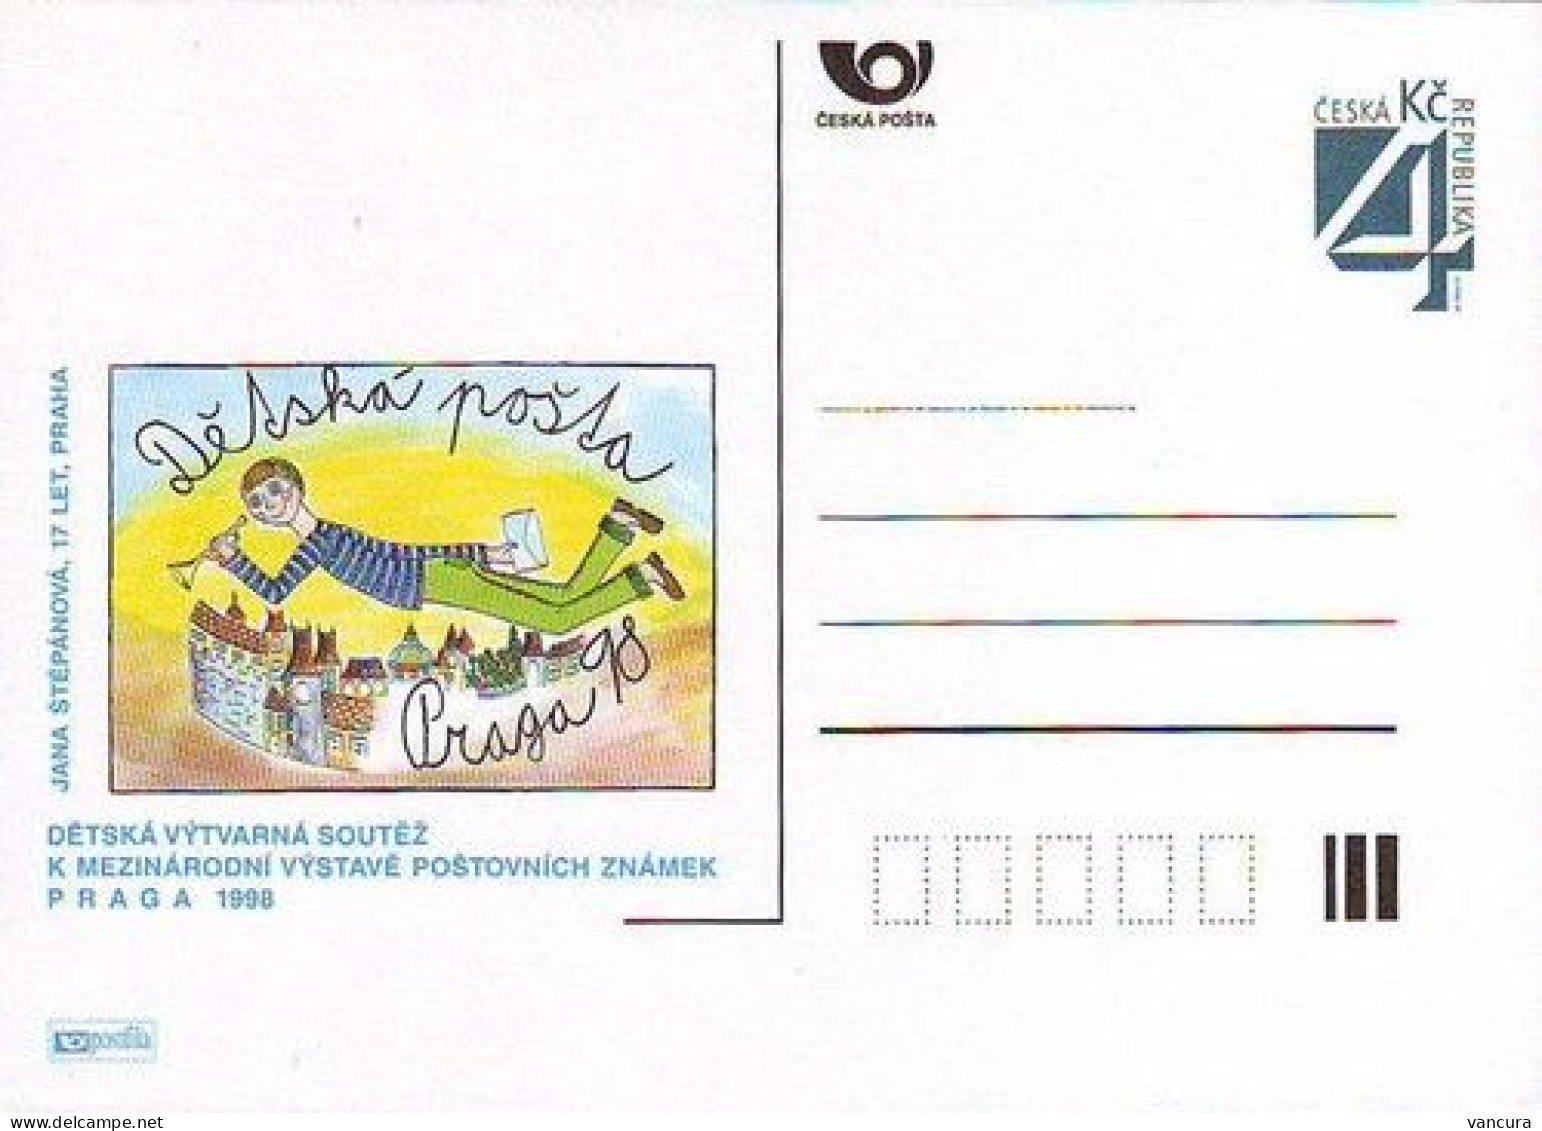 CDV A 38 - Czech Republic Children Post On Praga 1998 - Postcards